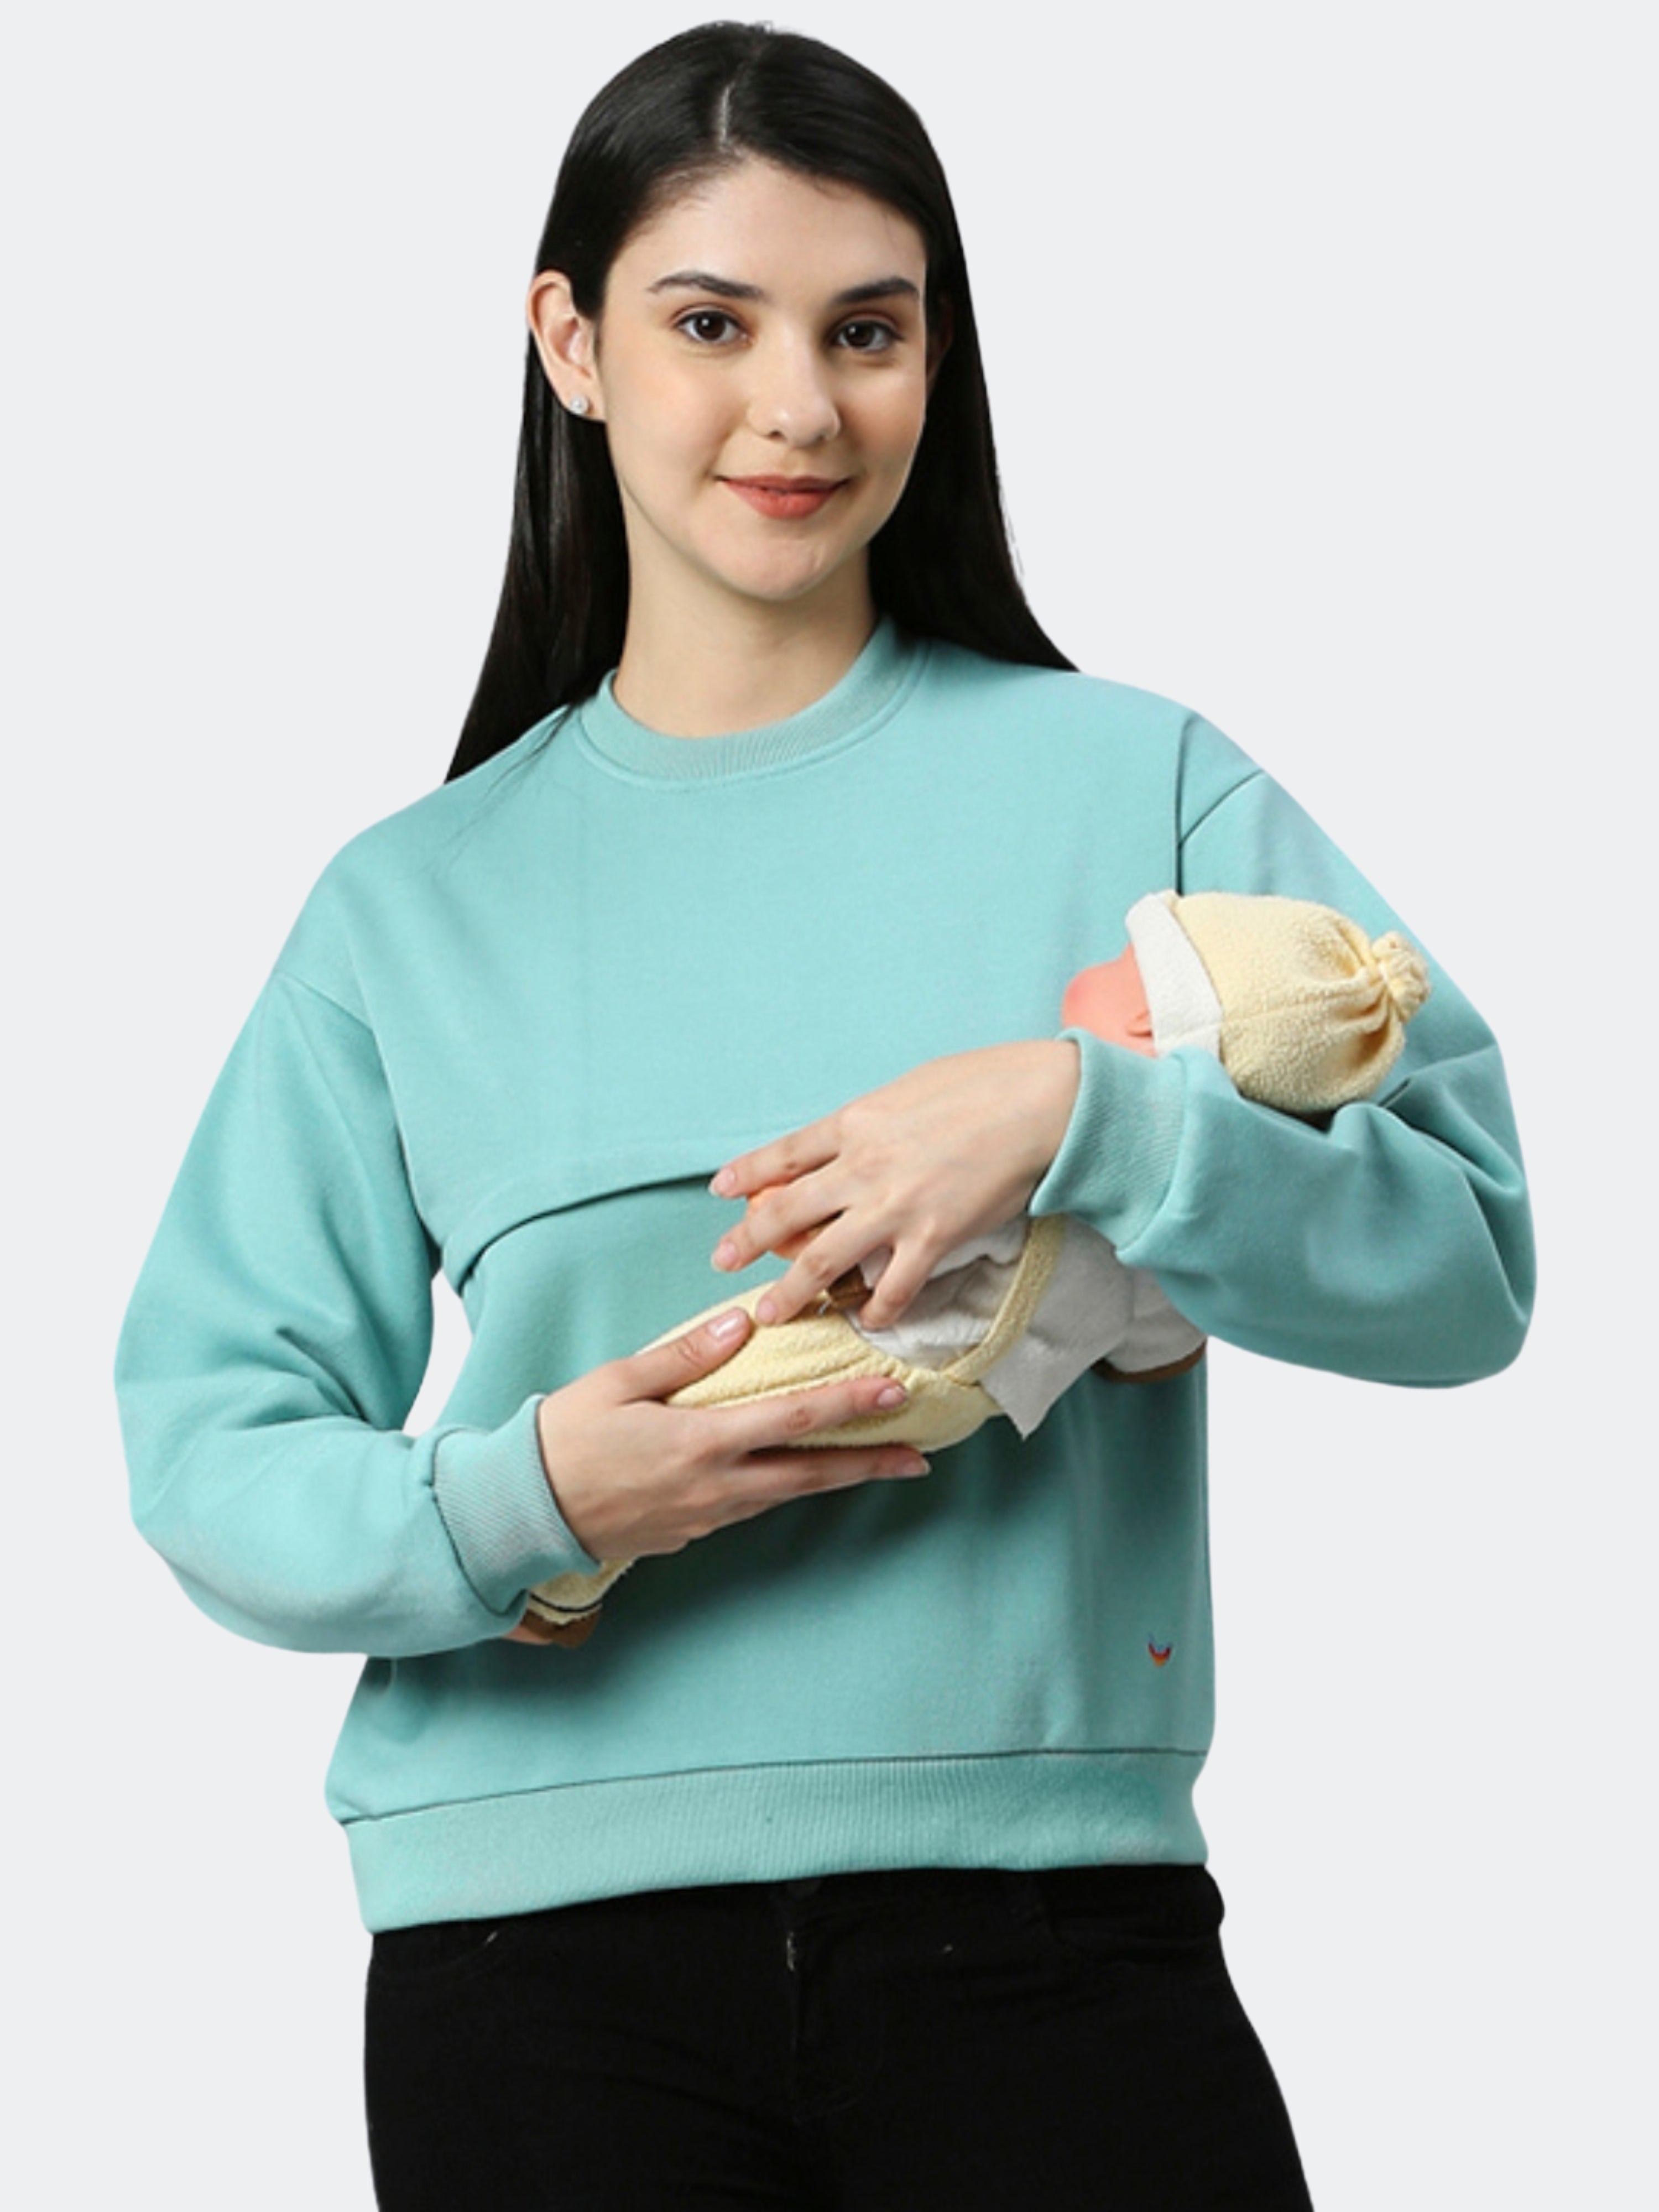 Fashionable Nursing Sweatshirt For Women